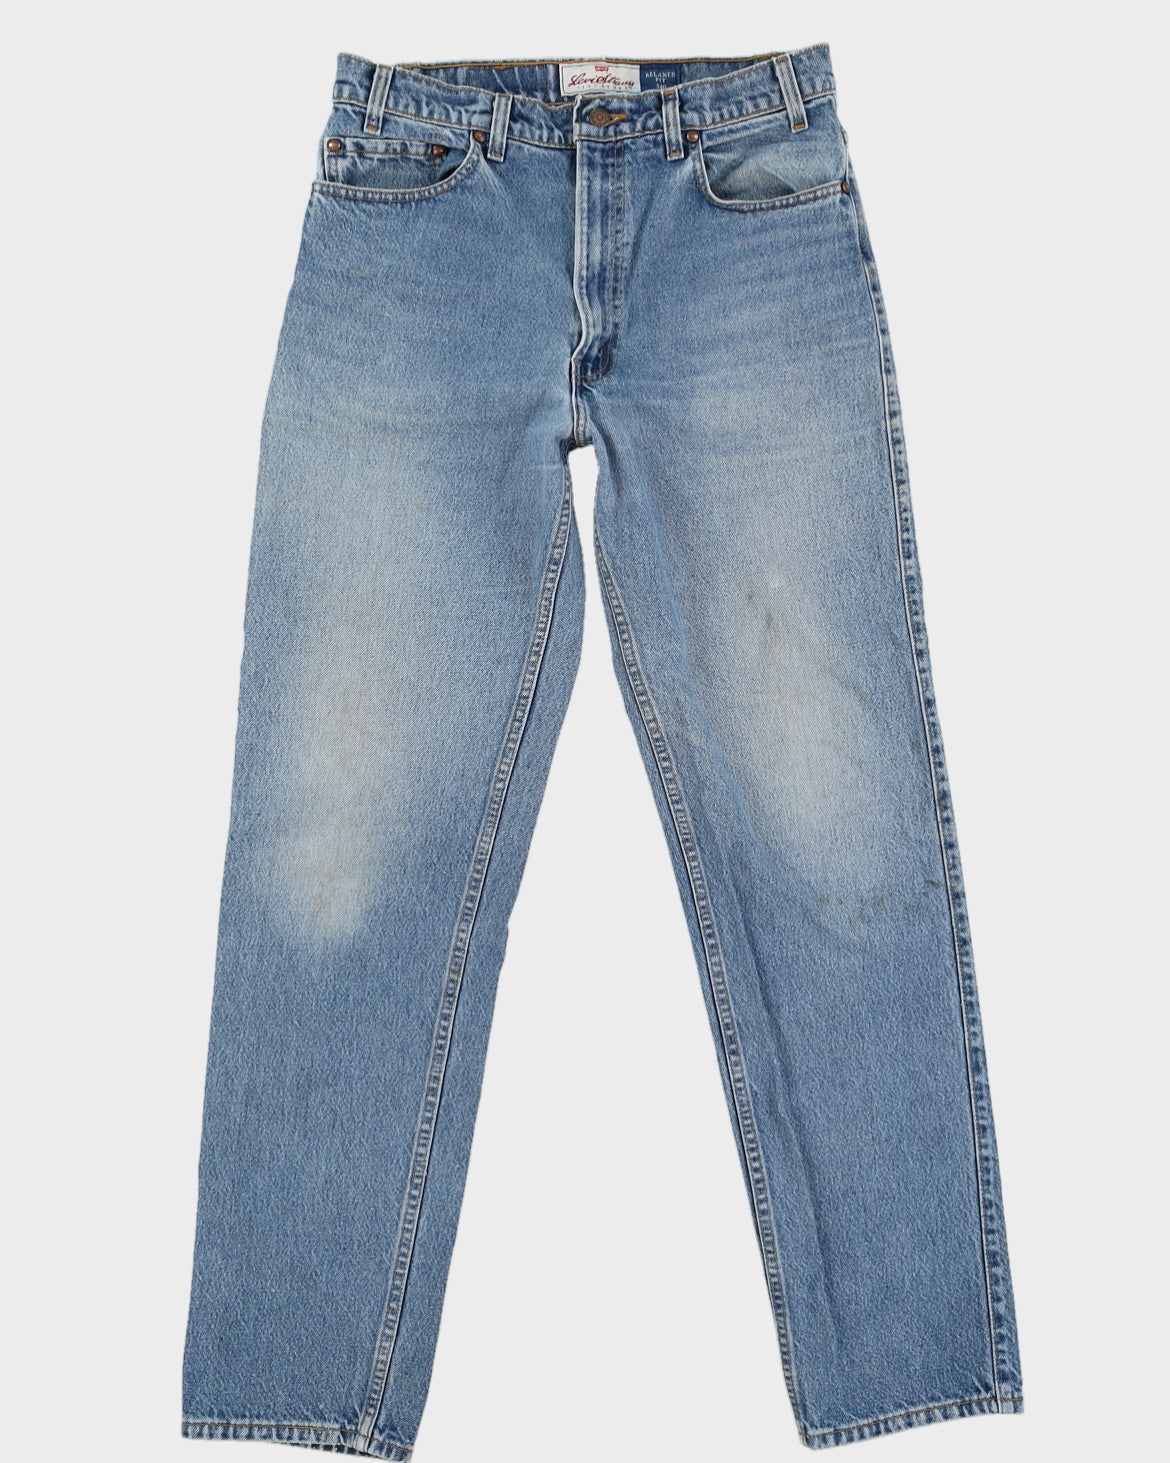 Vintage 90s Levi's Medium Washed Gold Tab Blue Jeans - W33 L34